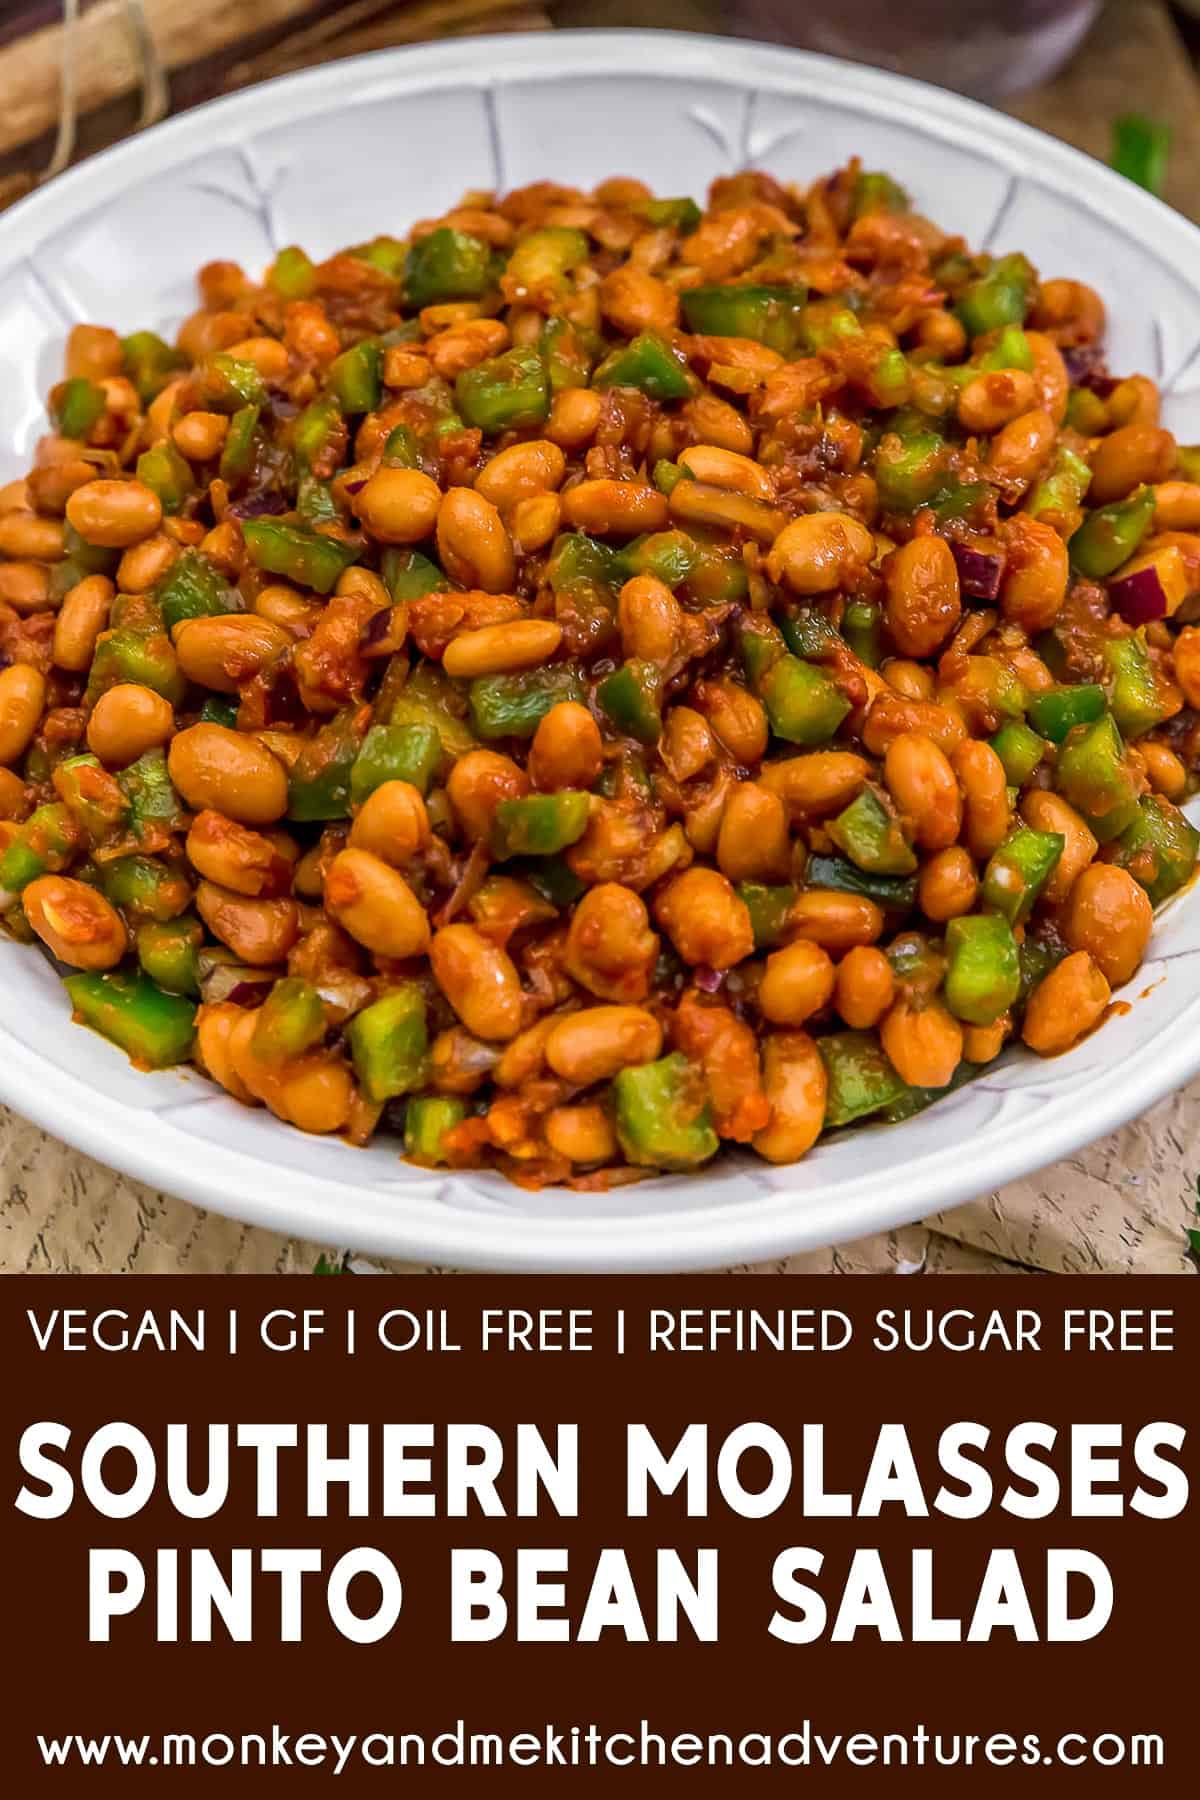 Southern Molasses Pinto Bean Salad with Text Description